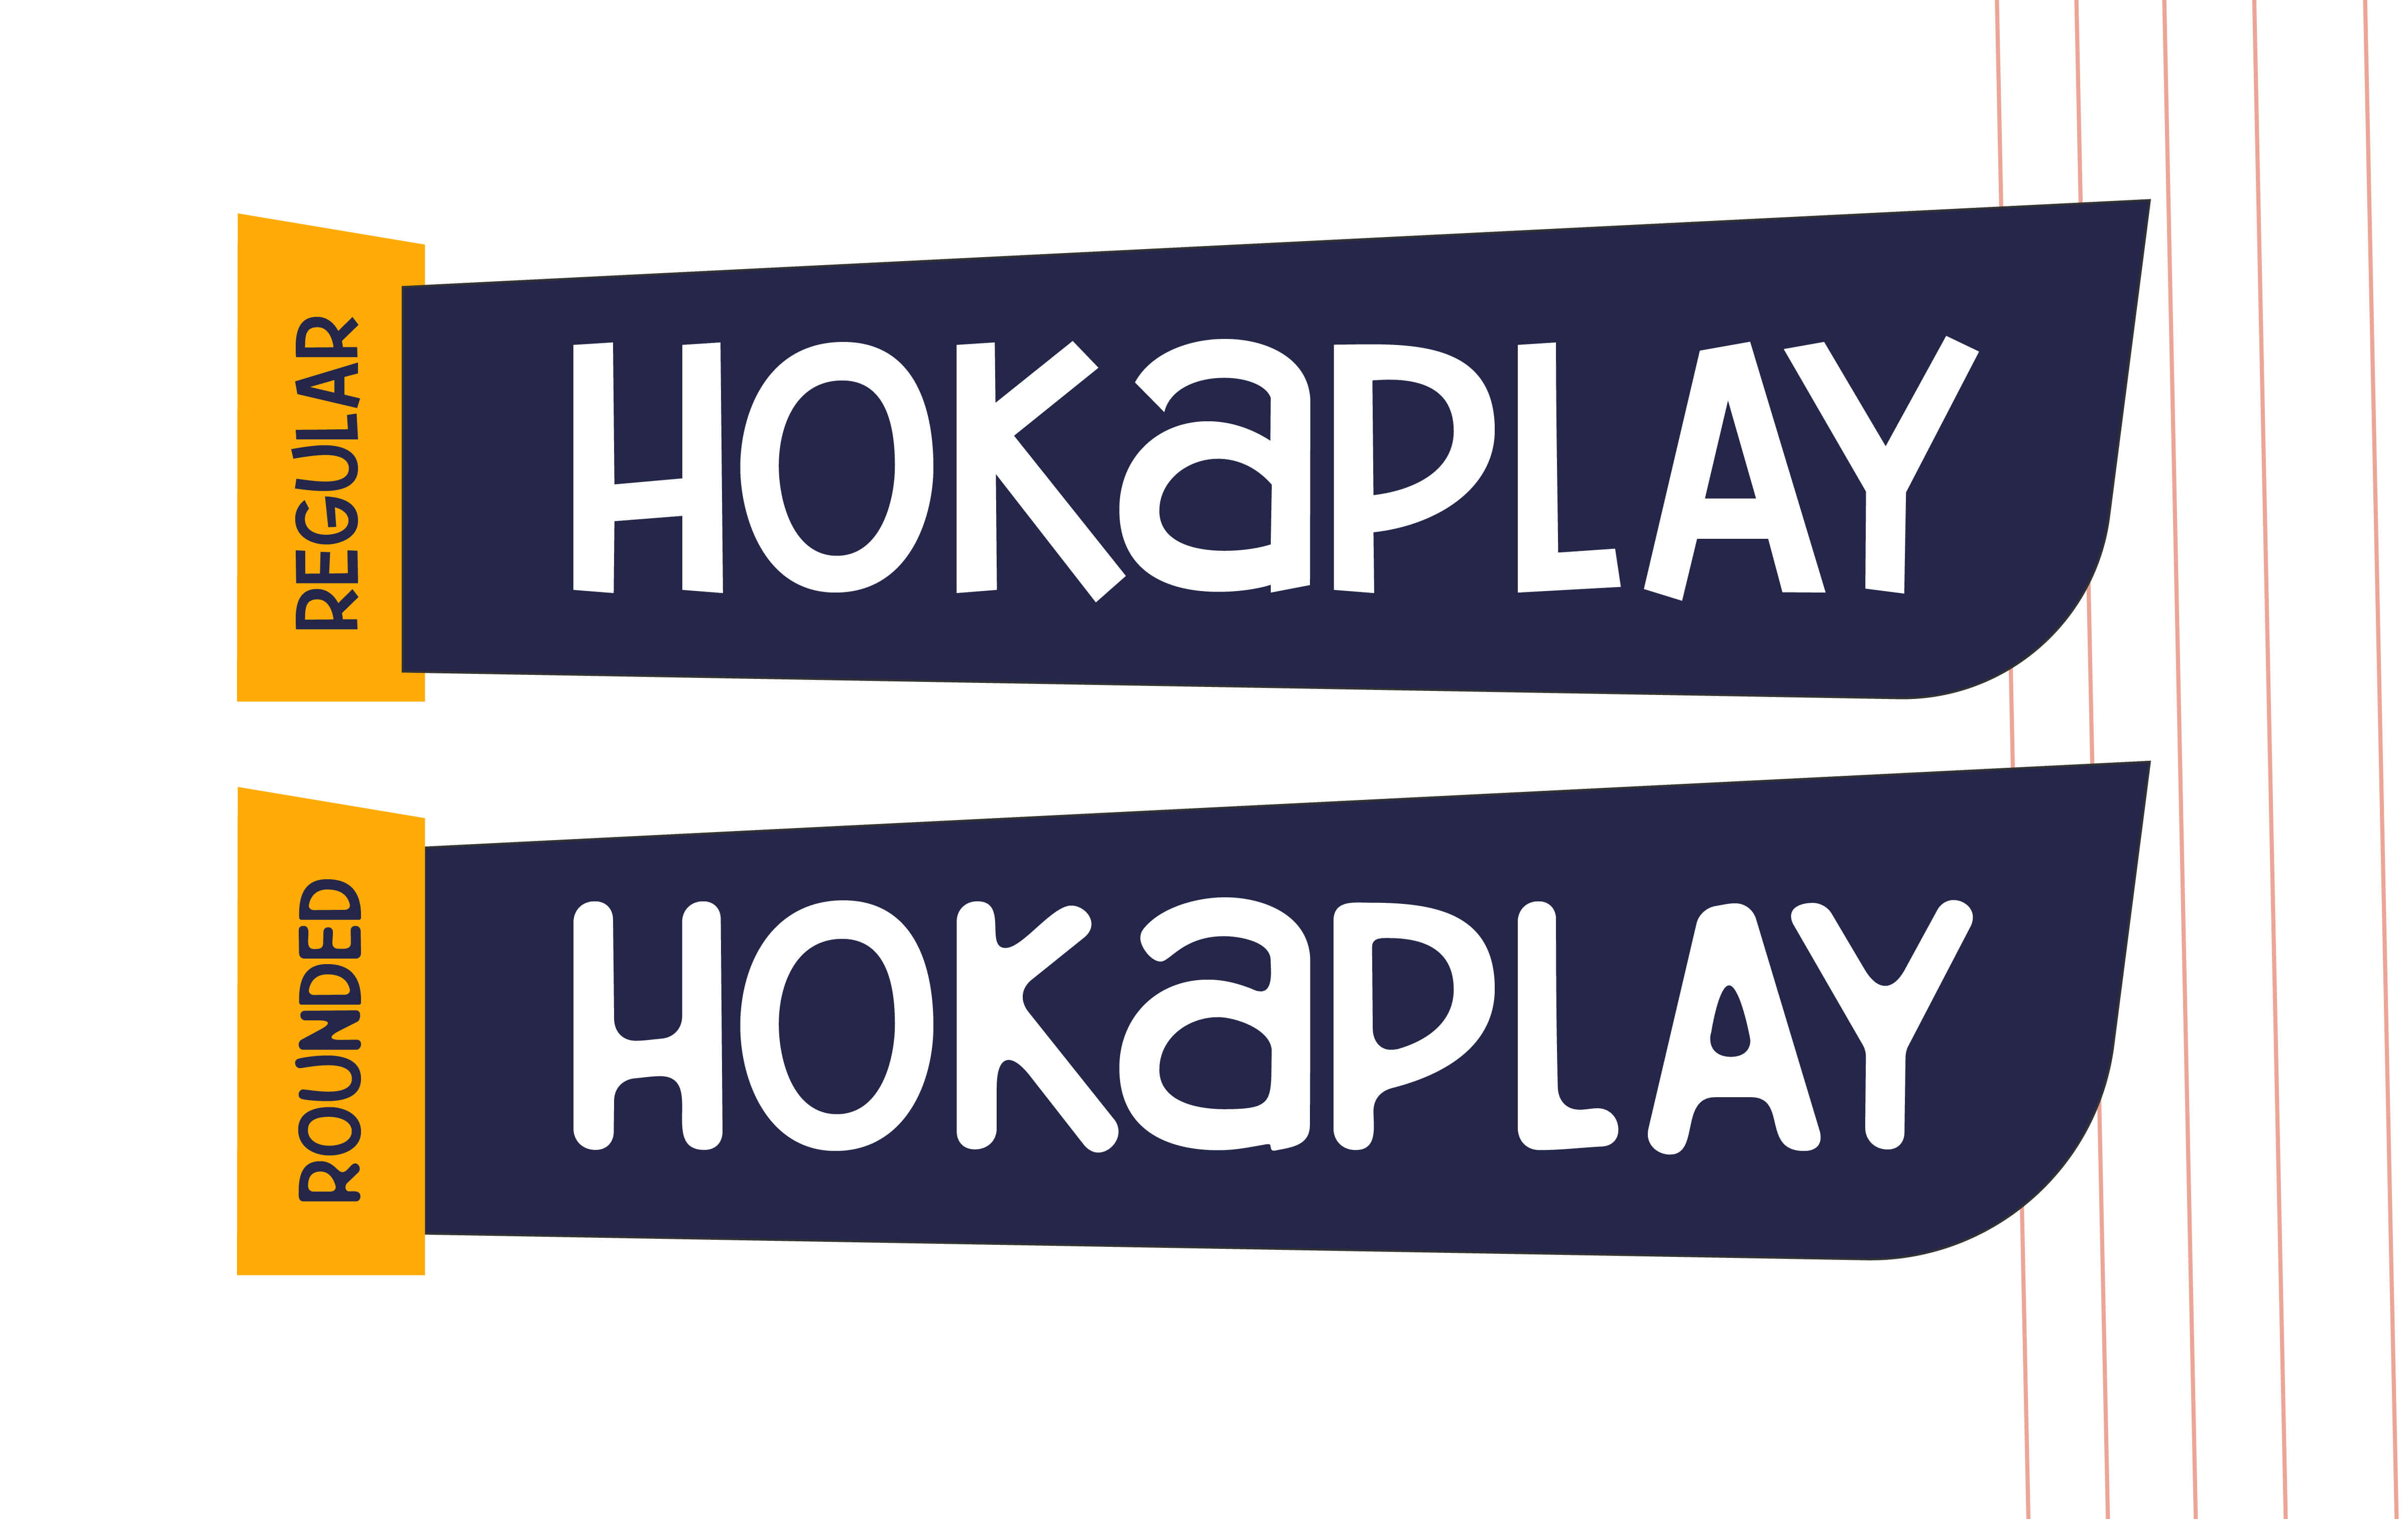 Hokaplay